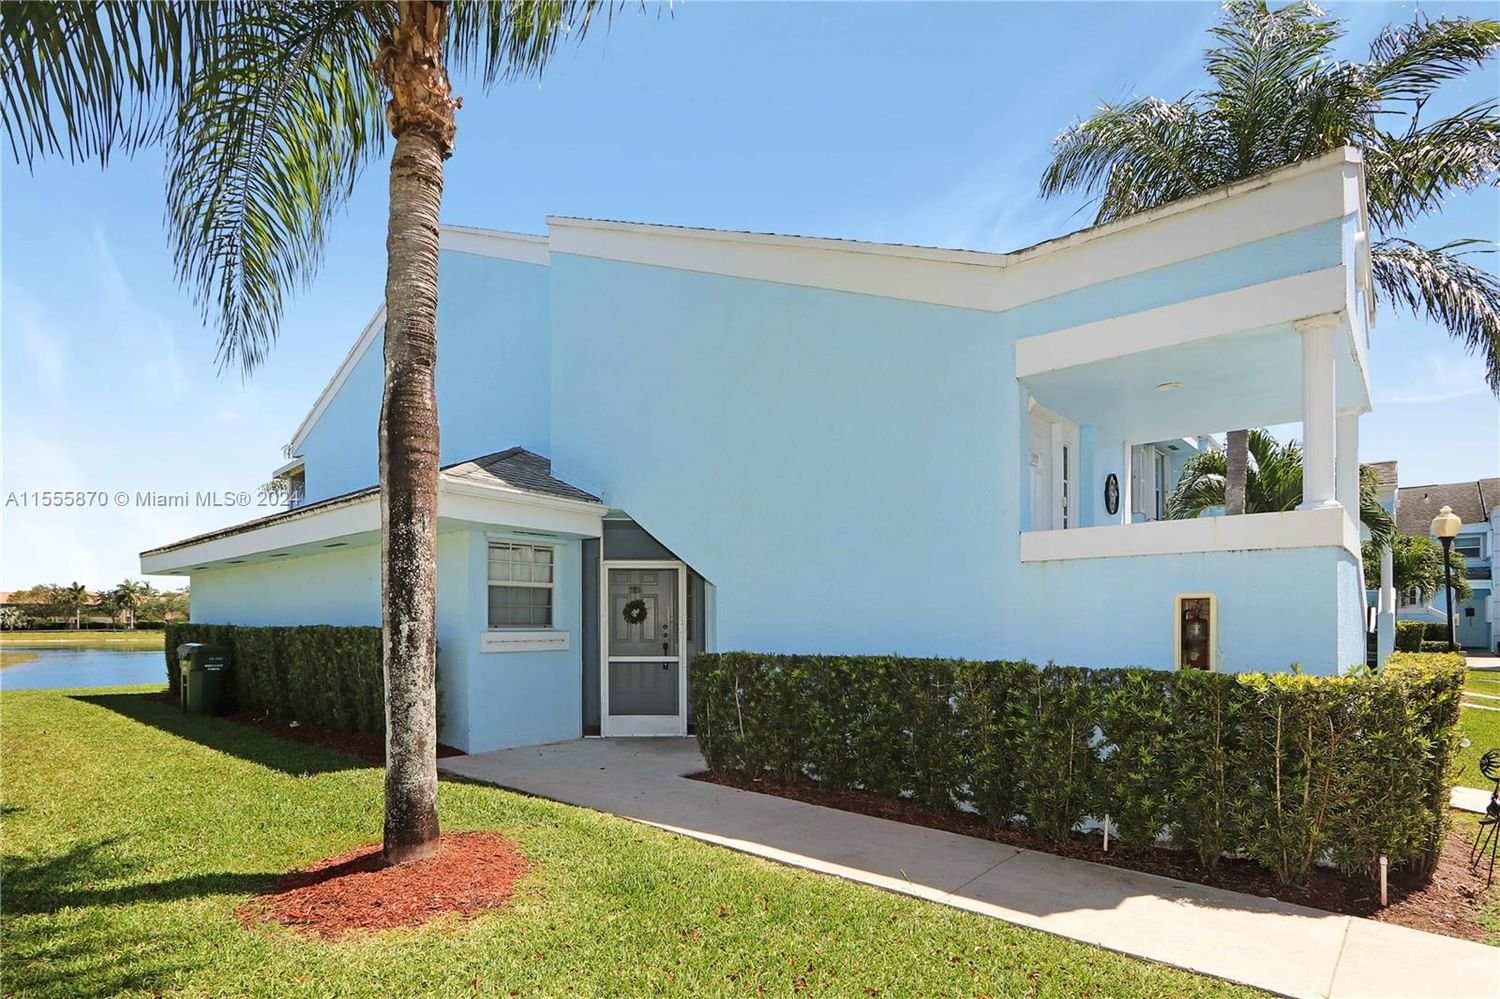 Real estate property located at 2023 26th Ln #101, Miami-Dade County, KEYS GATE CONDO NO EIGHT, Homestead, FL